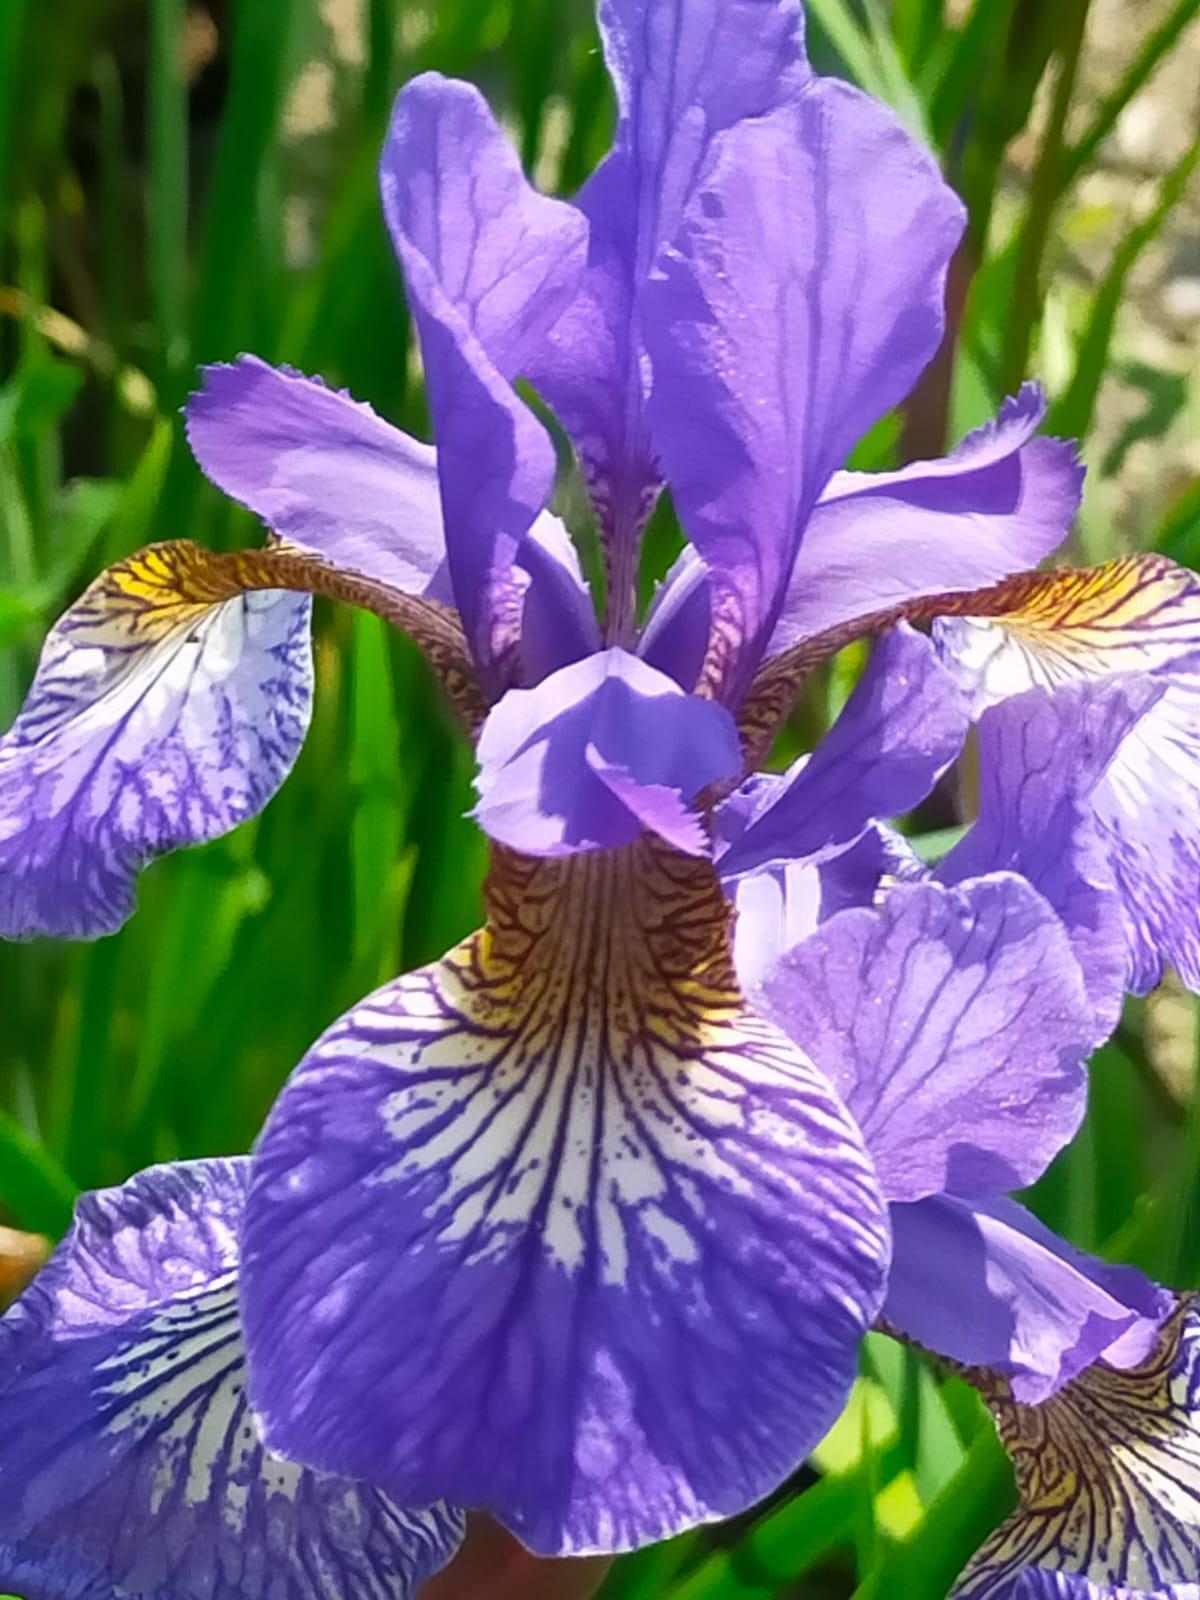 Irresistable Irises….